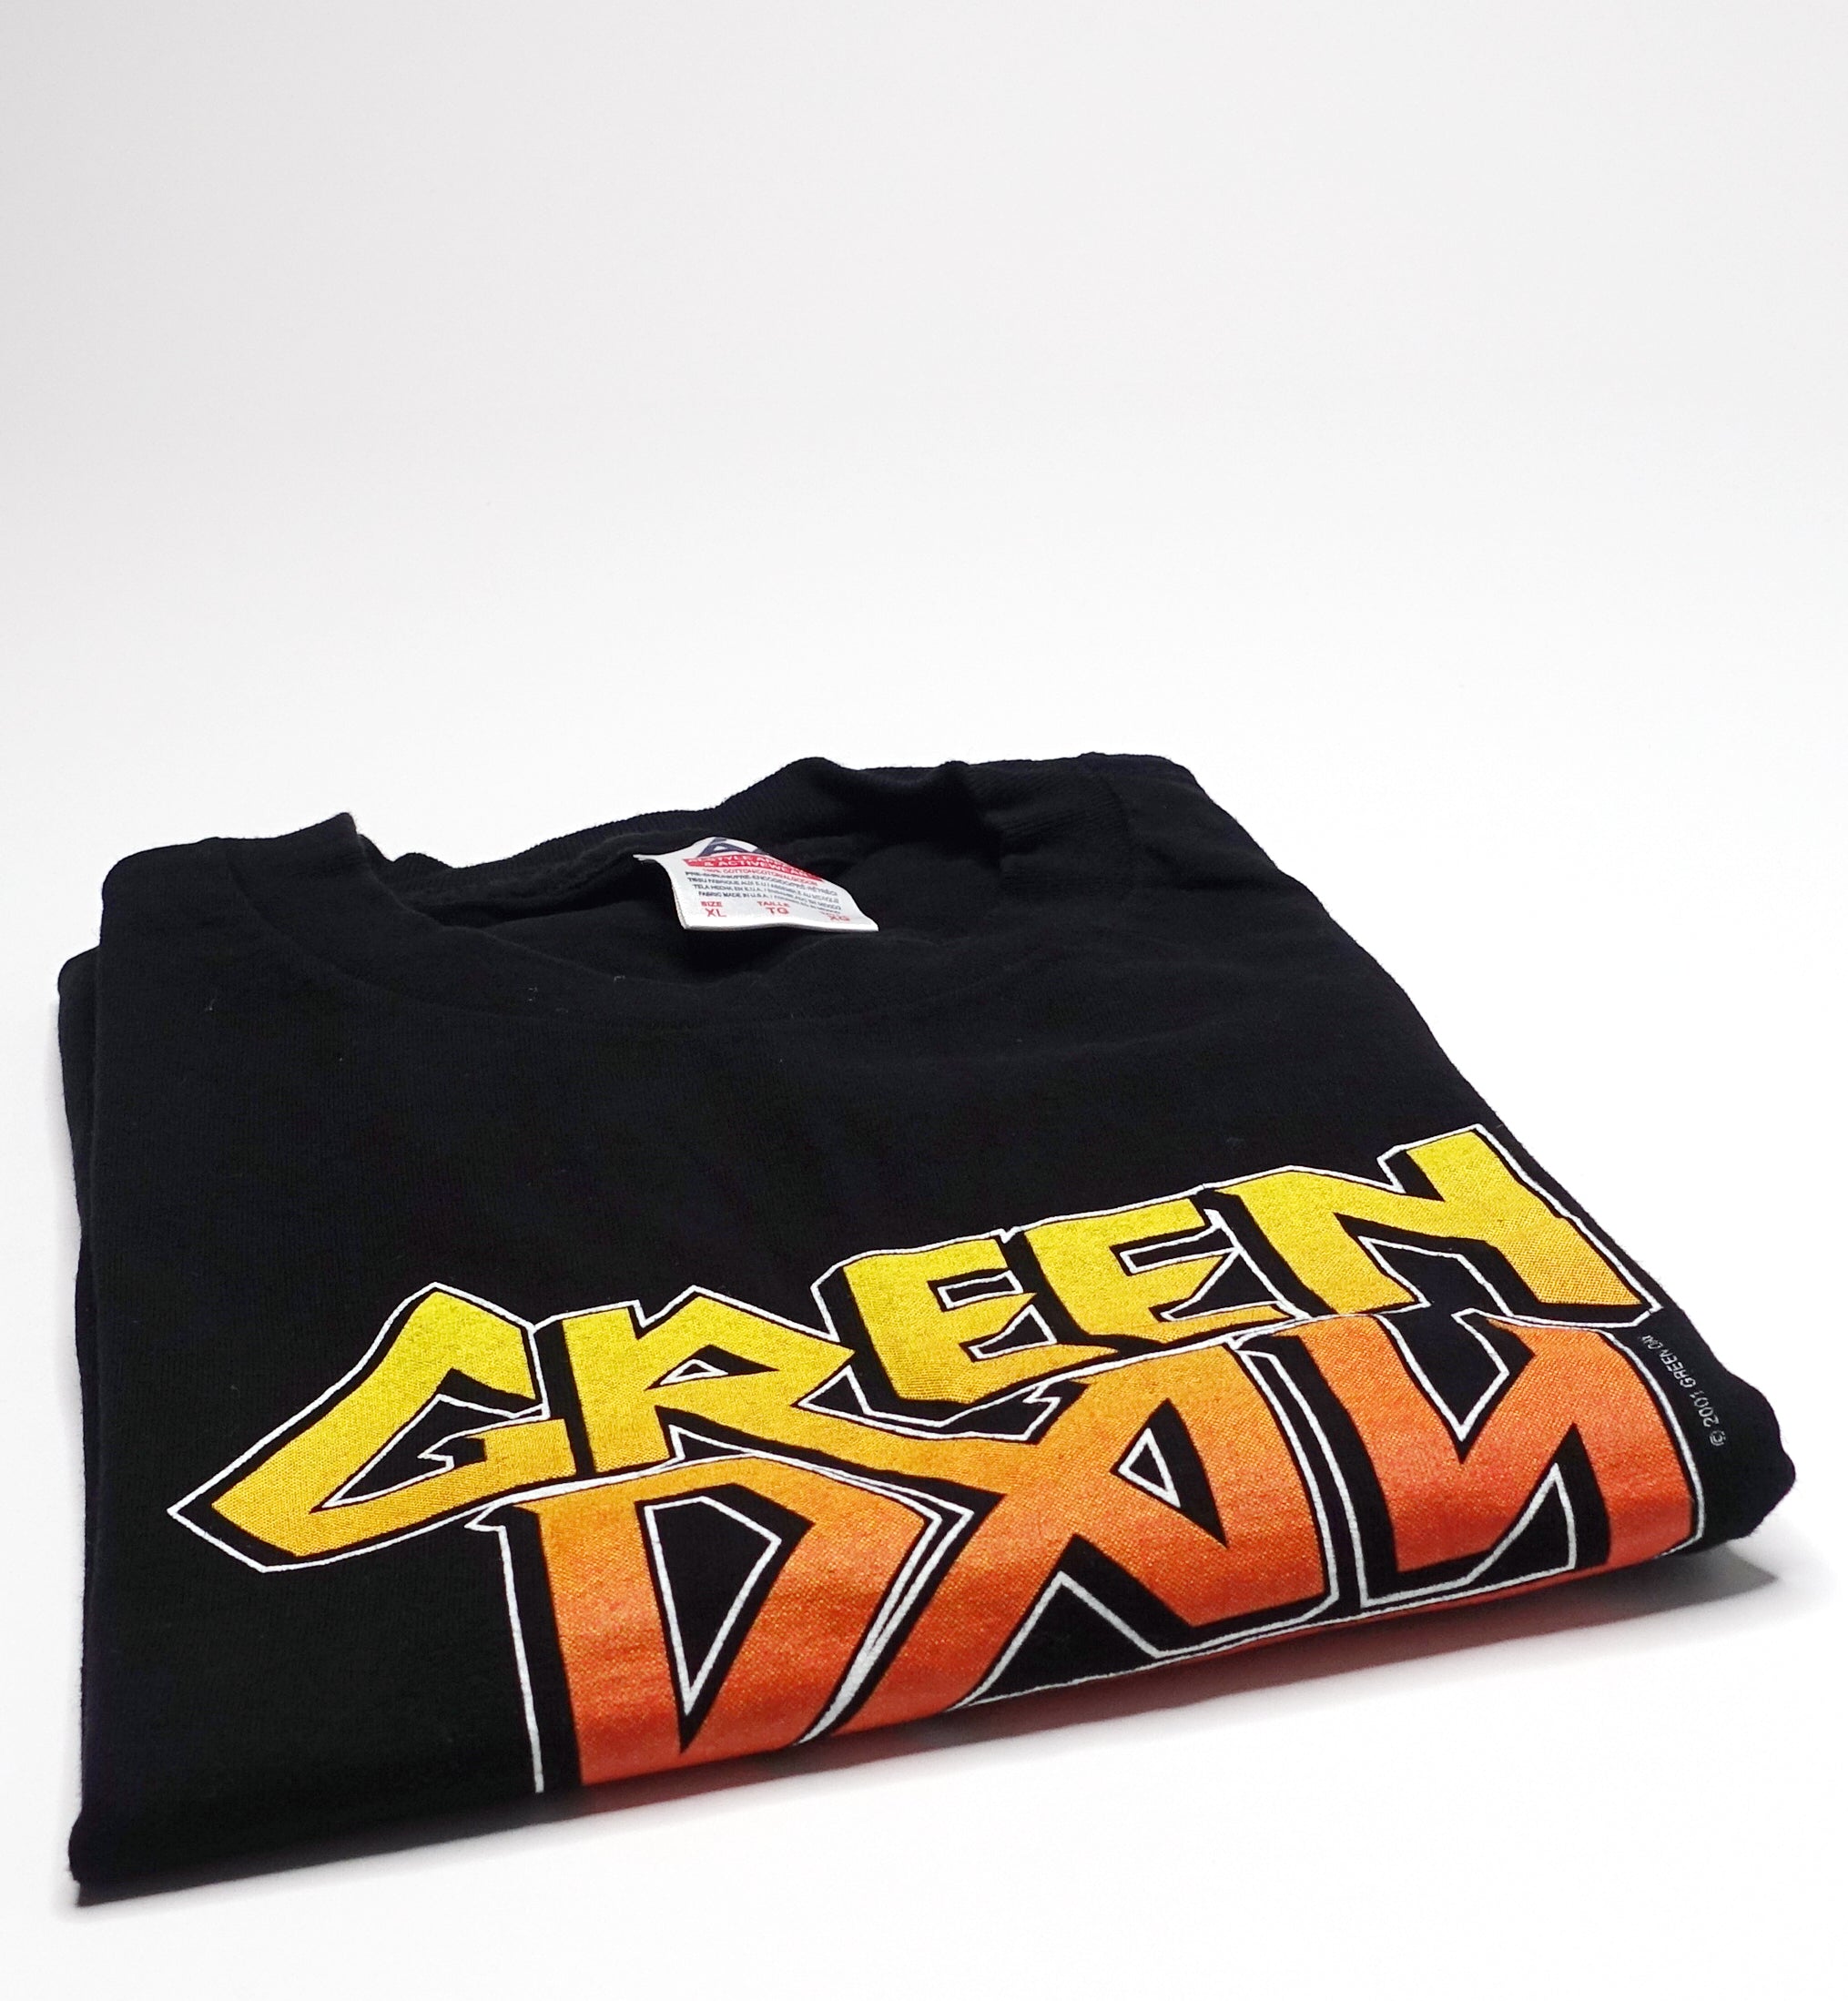 Green Day - Taste The Lightning / Warning 2001 Tour Shirt Size XL